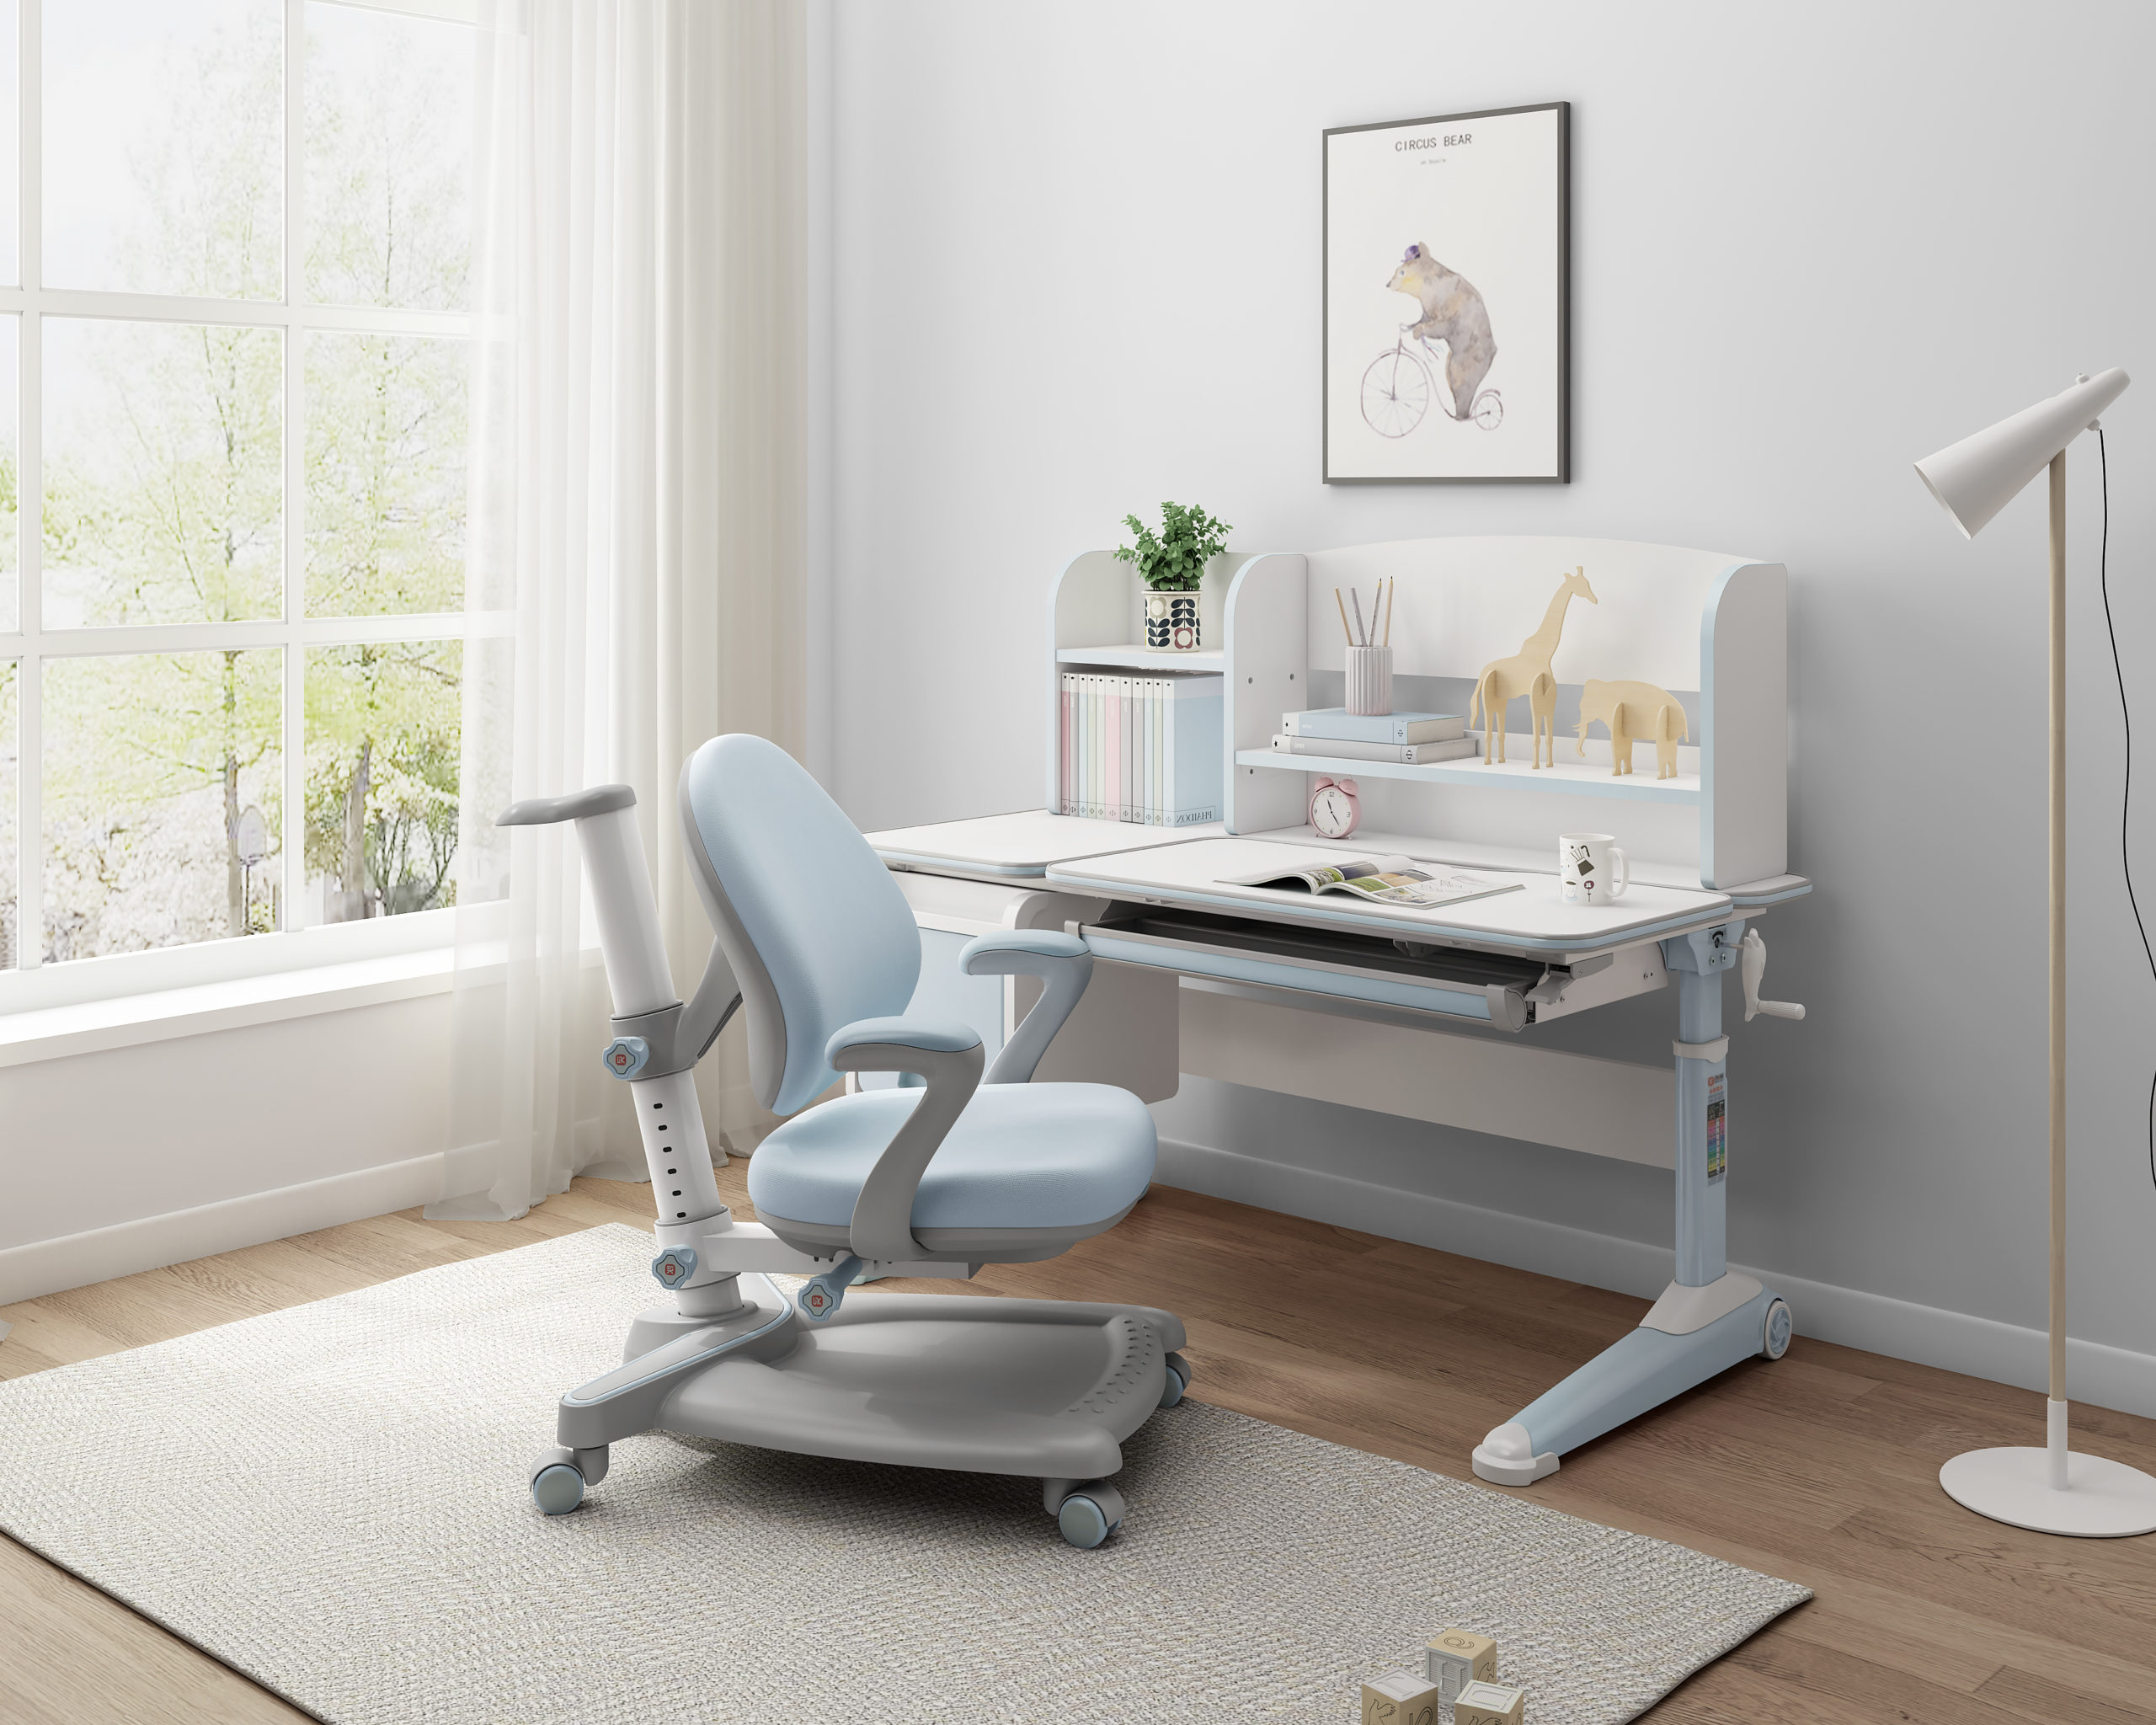 height adjustable children's desk and chair set